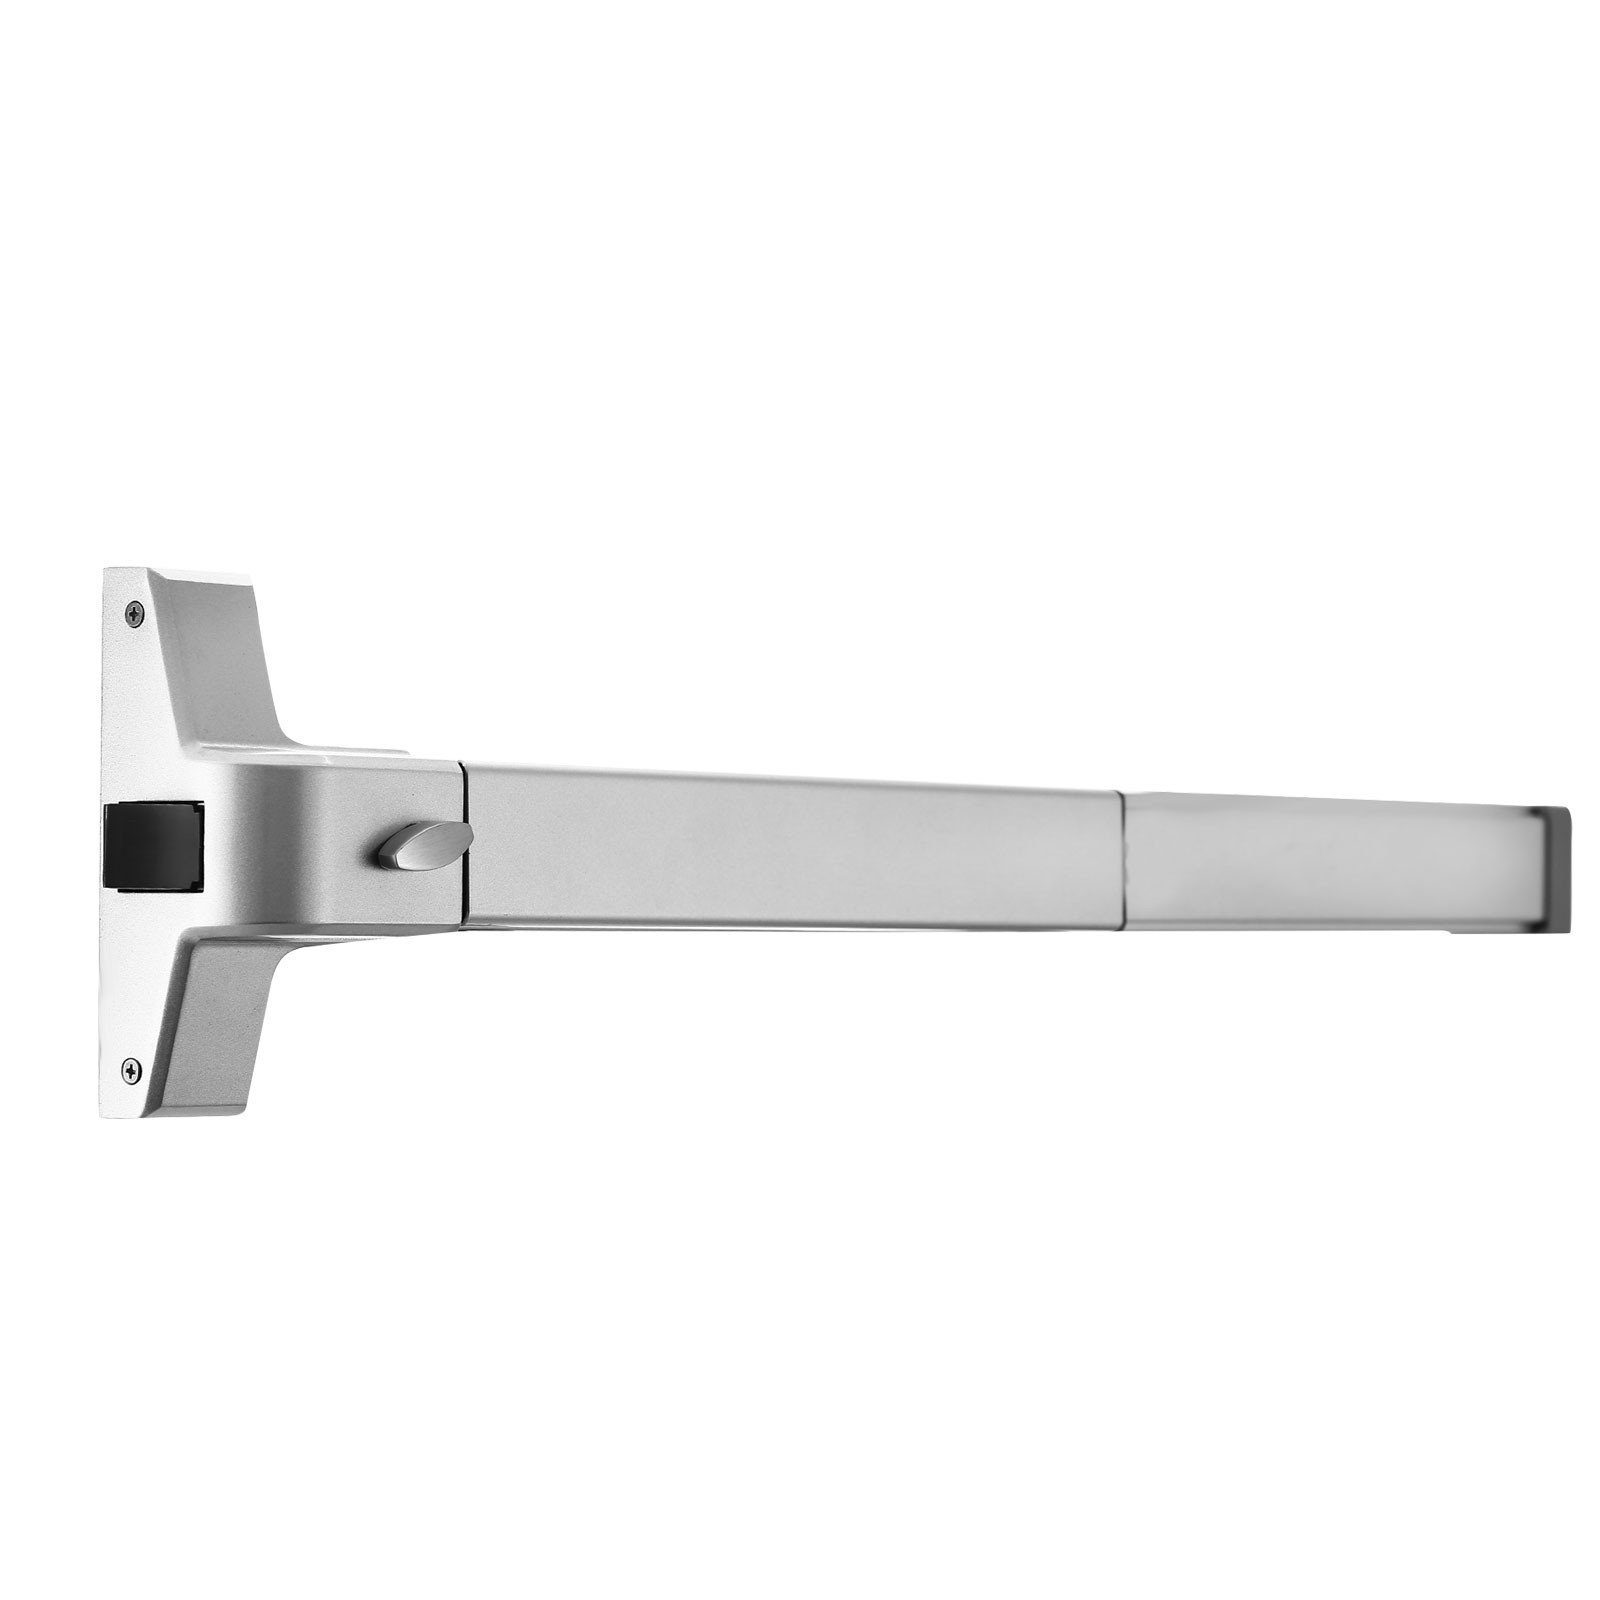 Push Bar Panic Exit Device Aluminum Fits 28/" to 36/" doors